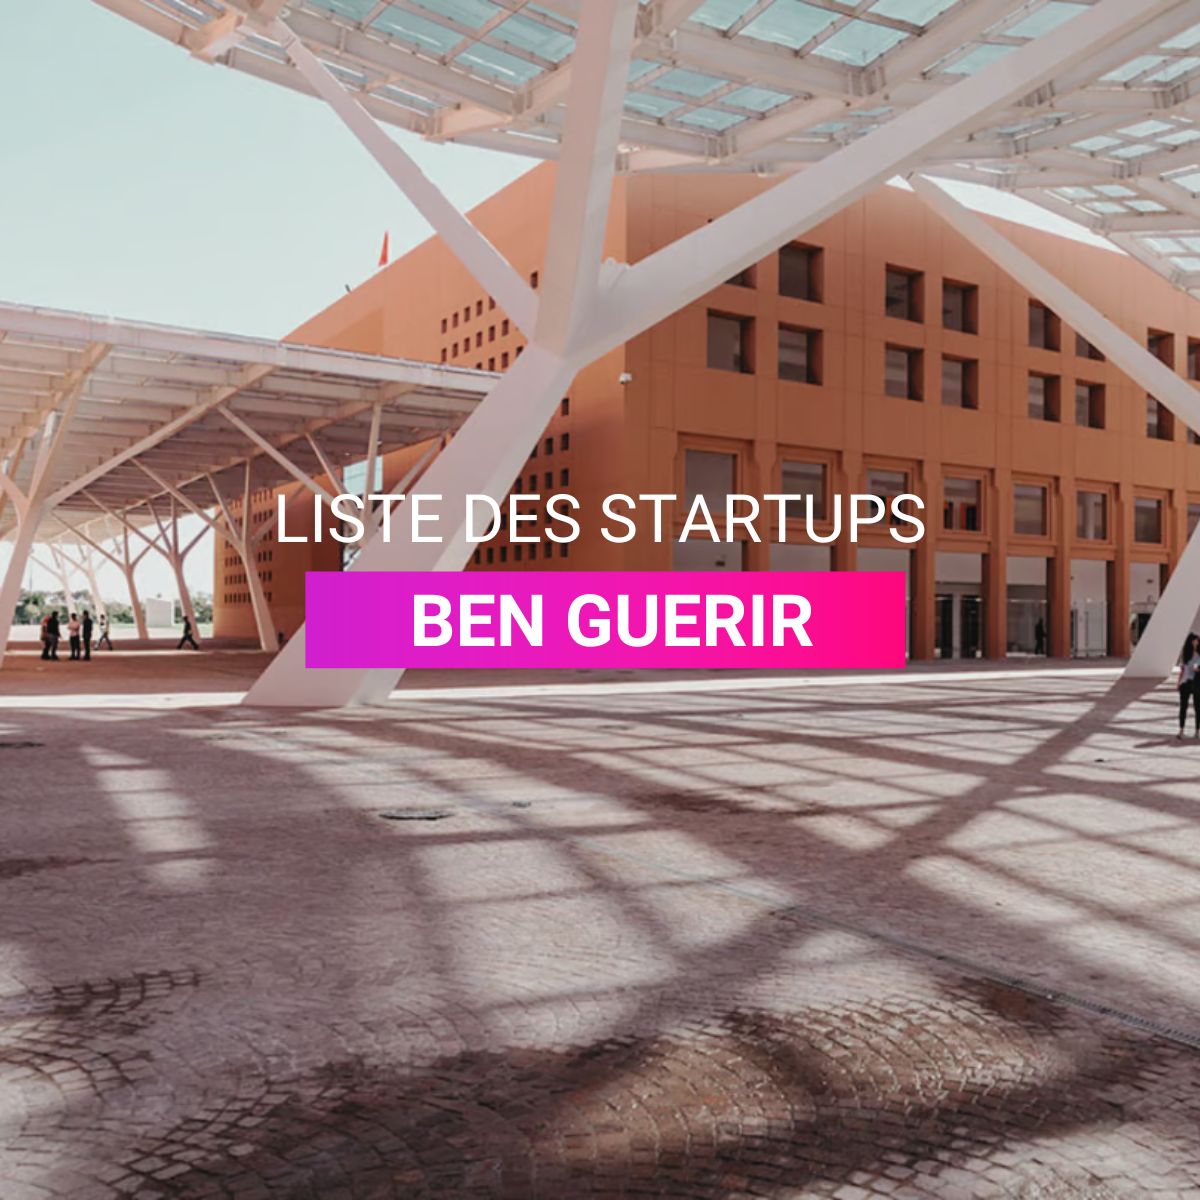 Liste des startups Ben guerir | Start-up.ma